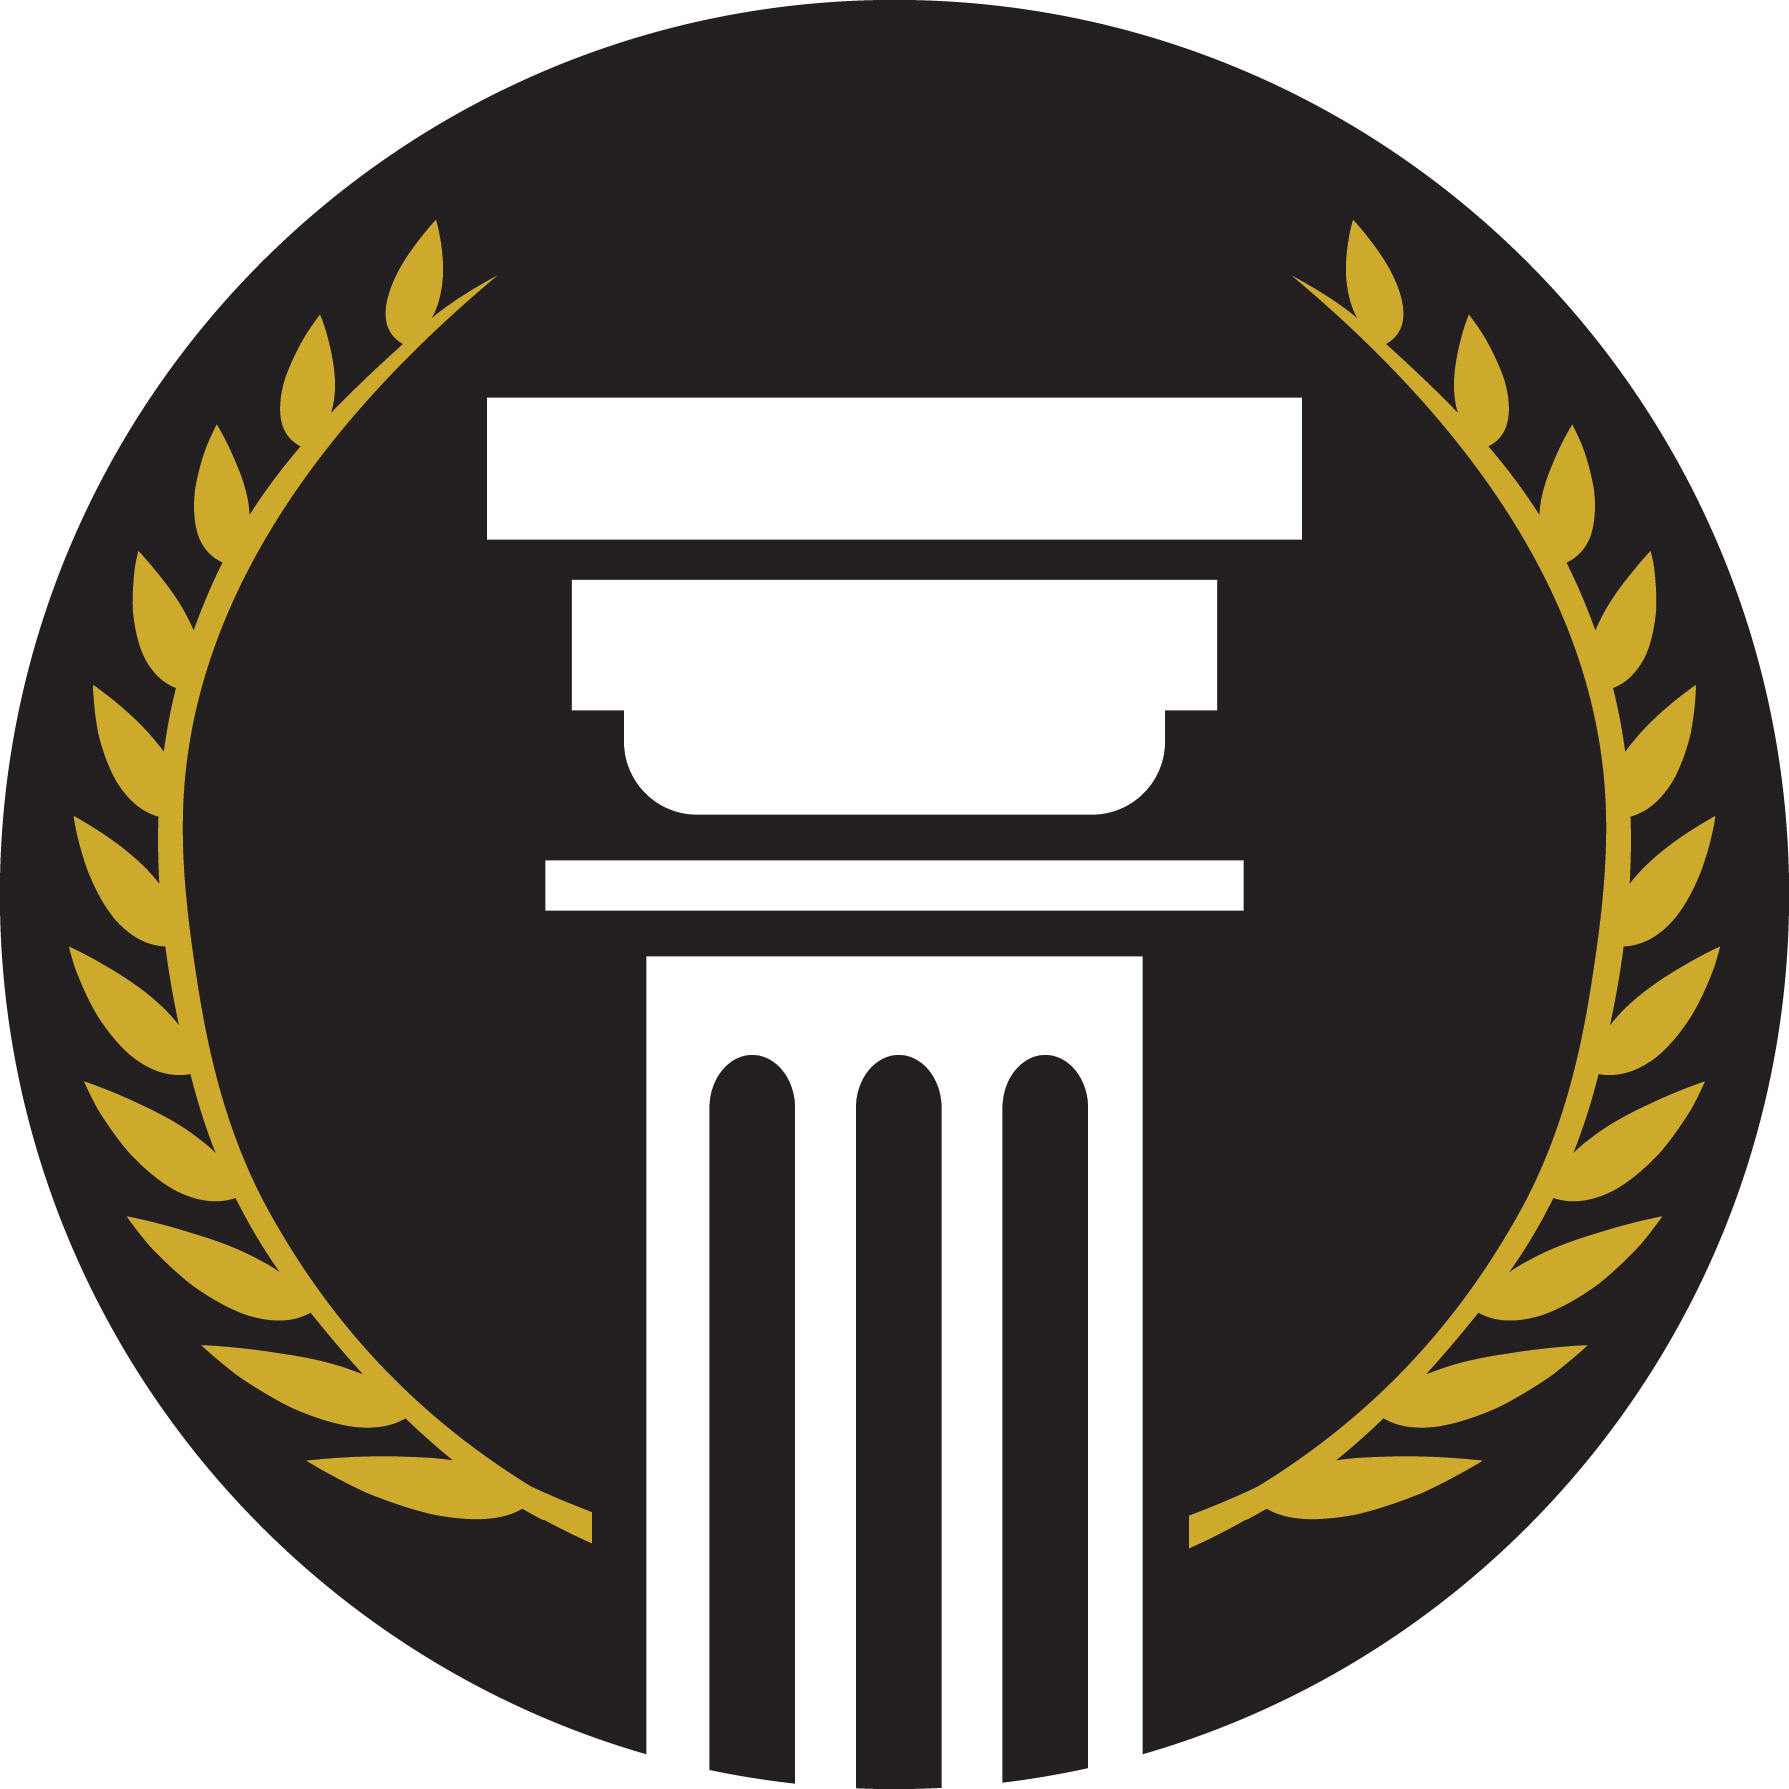 Plutus Foundation logo